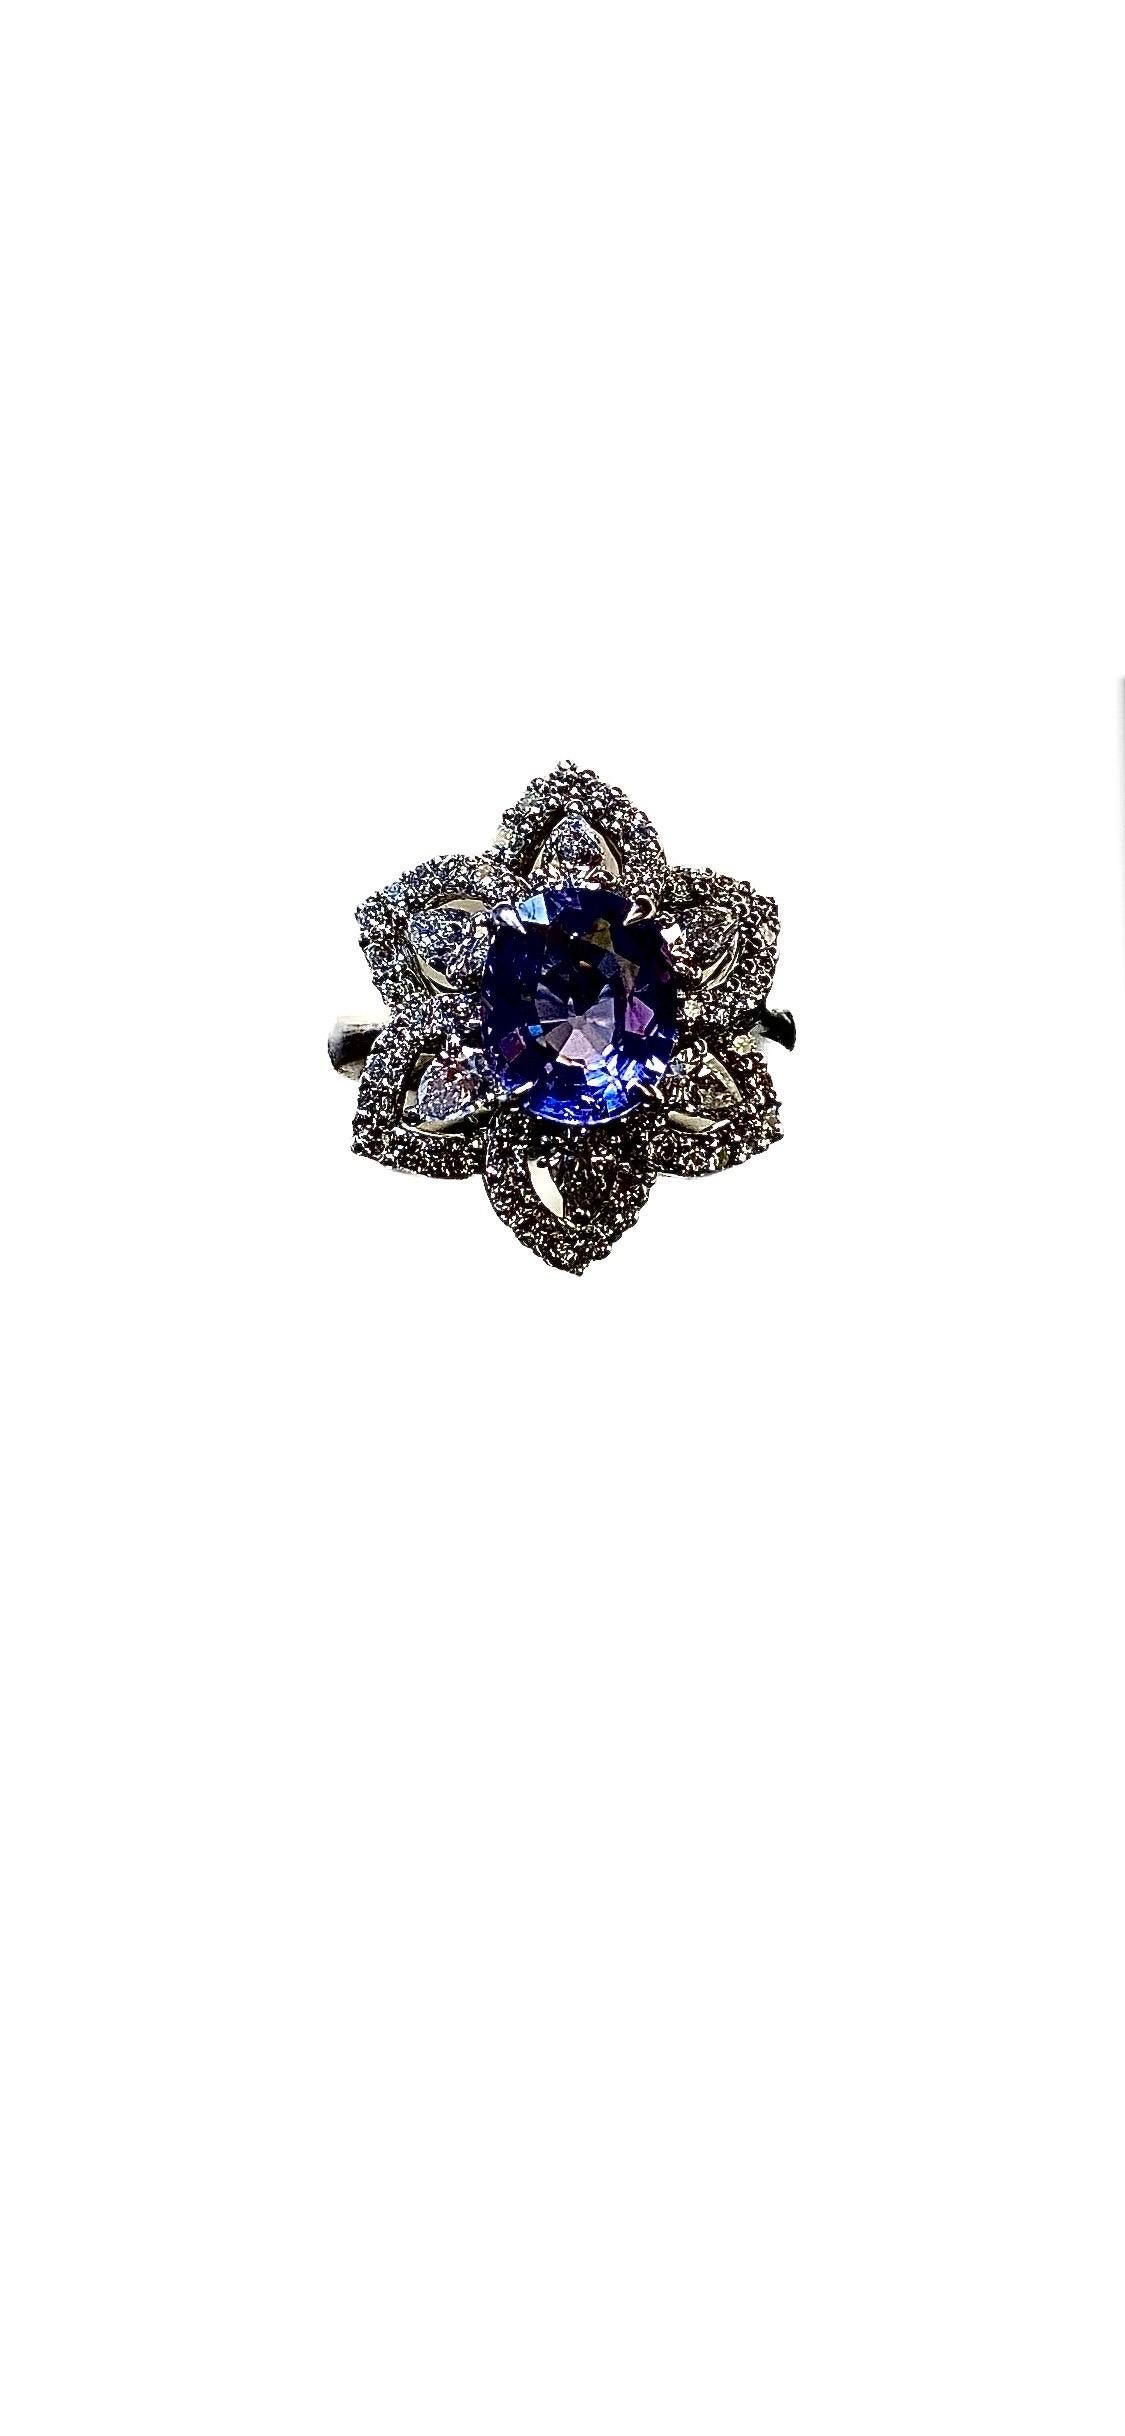 18K Gold GIA Certified 2.14 Carat Color Change Garnet Diamond Engagement Ring For Sale 3